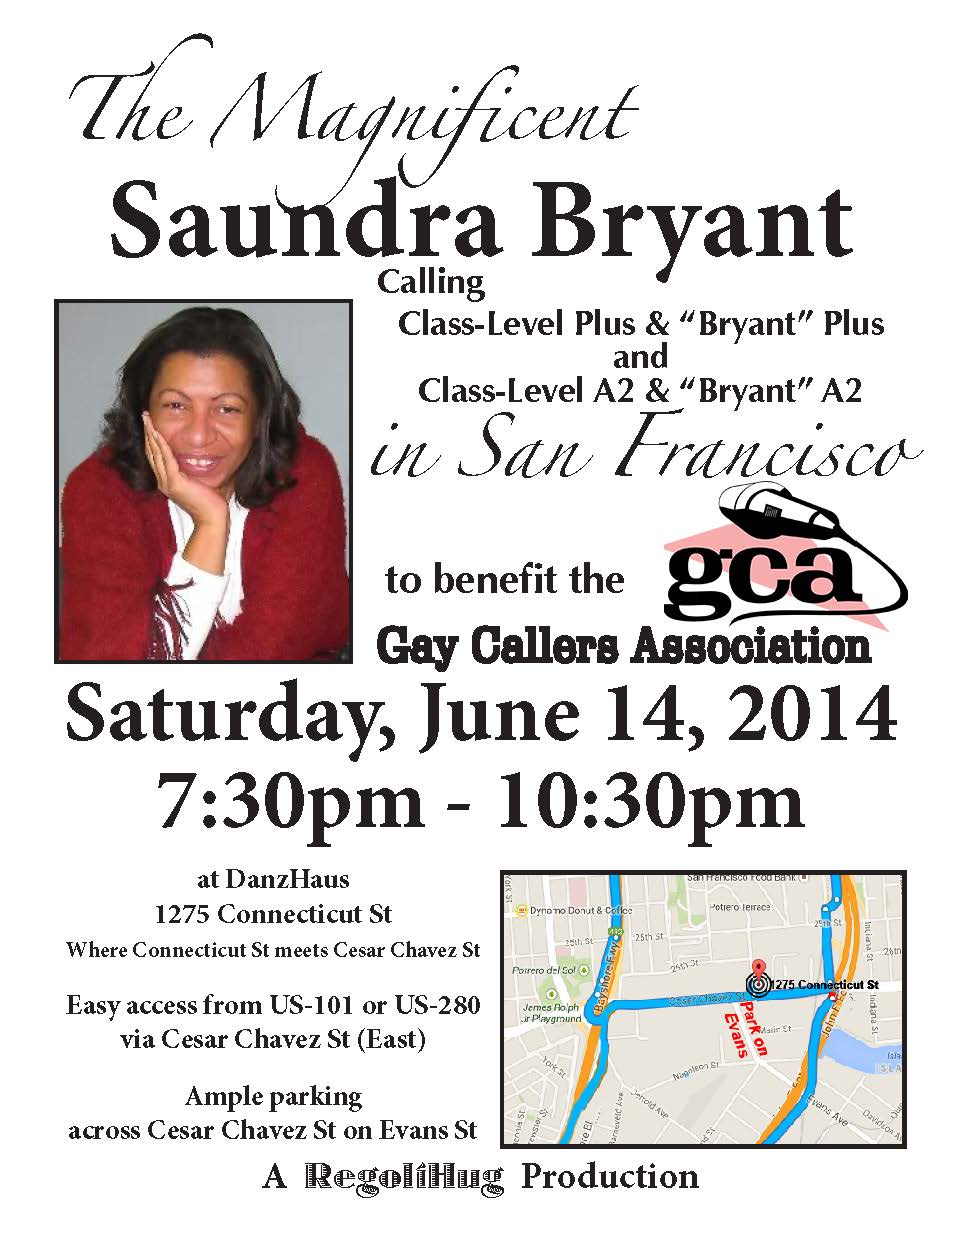 Saundra Bryant Calling on June 14th!